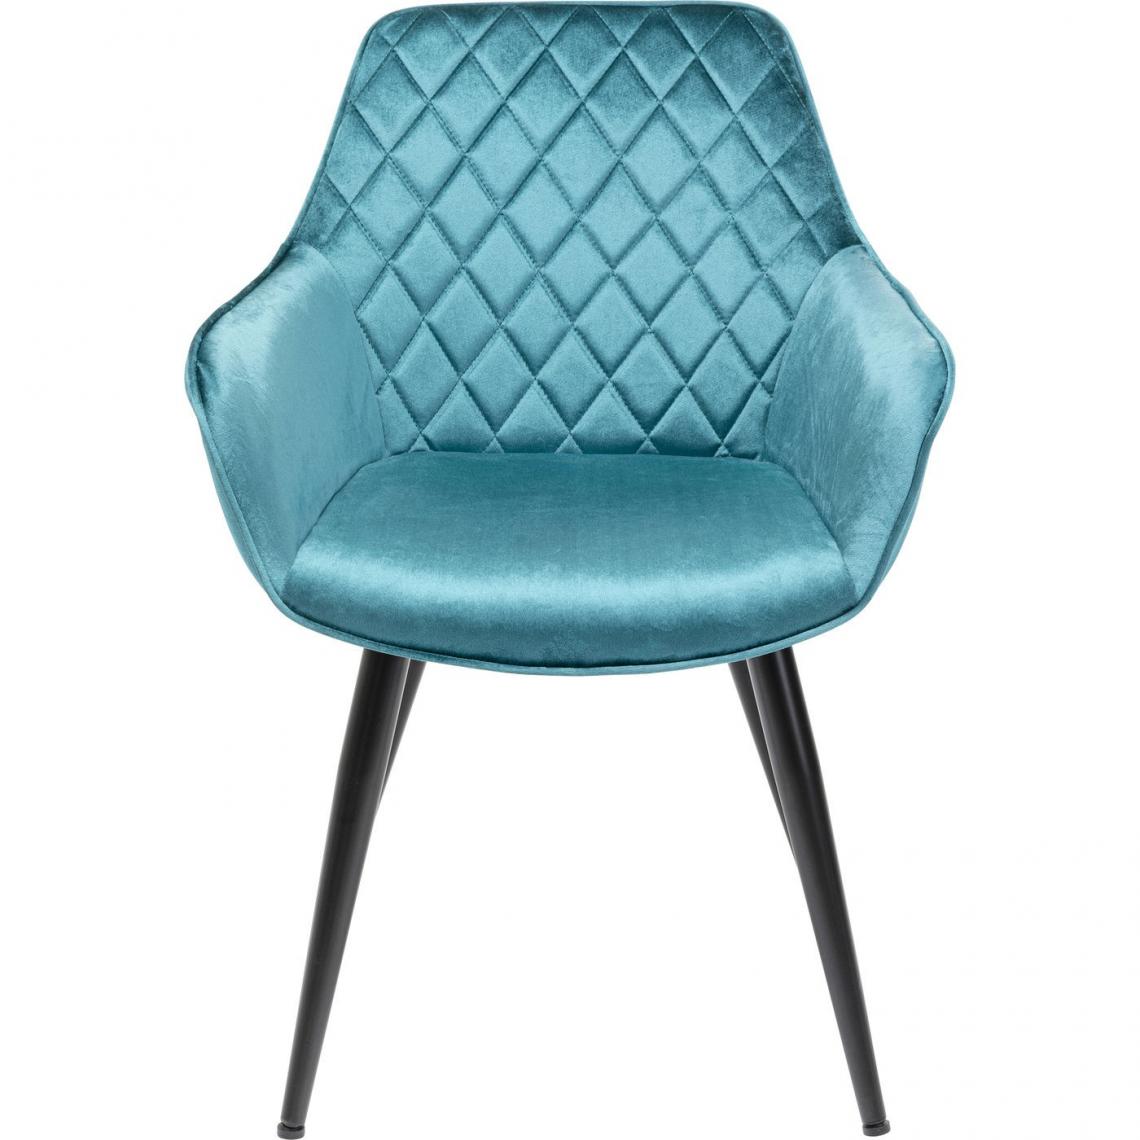 Karedesign - Chaise avec accoudoirs Harry velours bleu Kare Design - Chaises